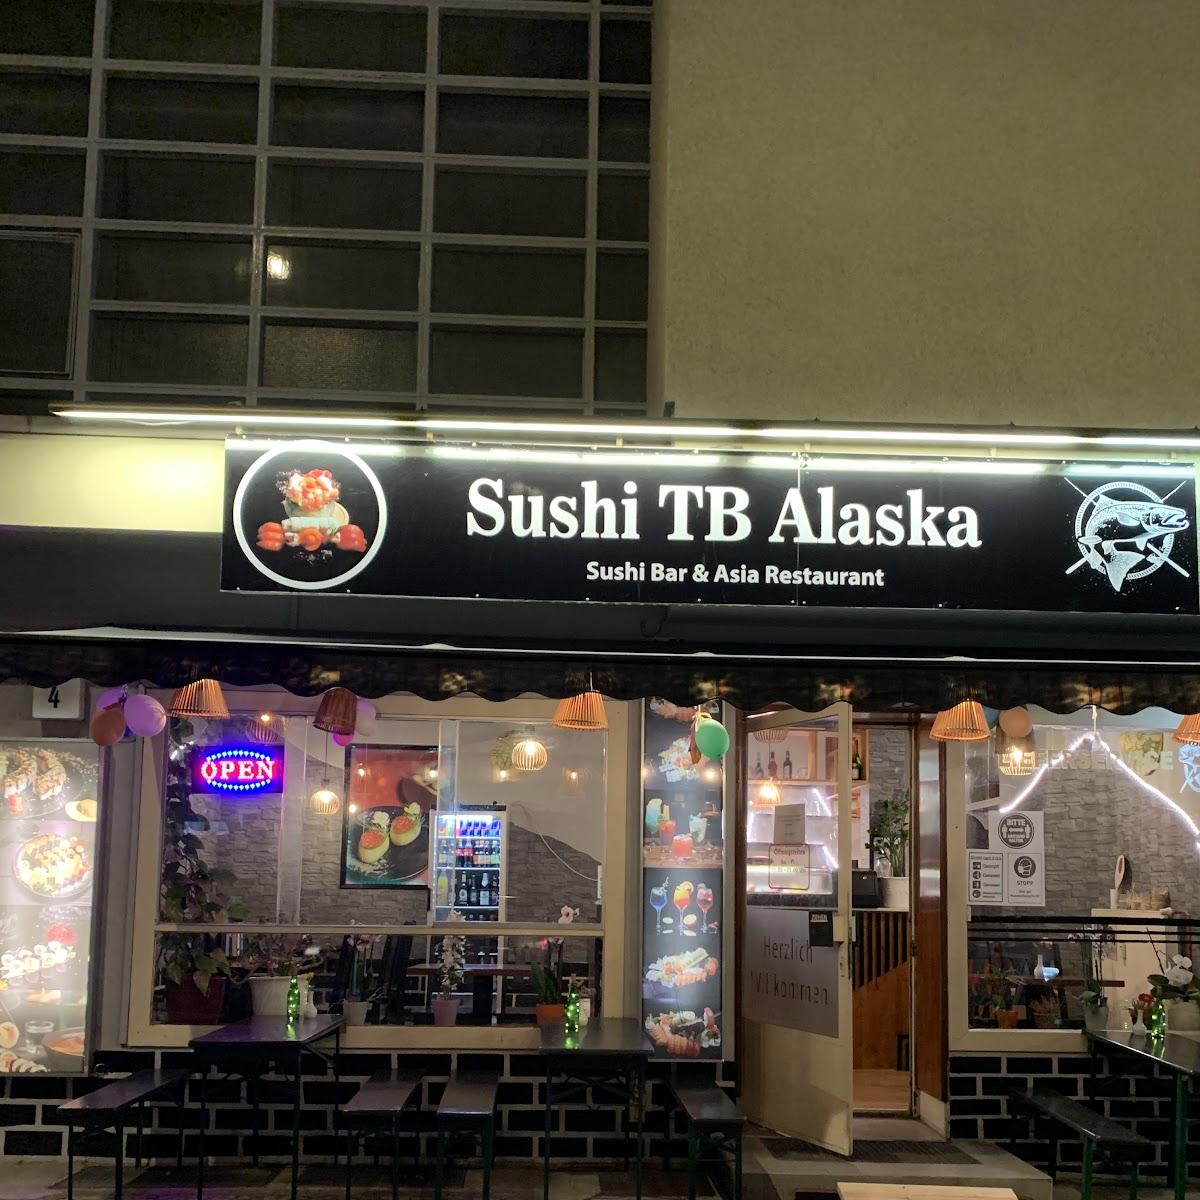 Restaurant "Sushi TB Alaska" in Berlin